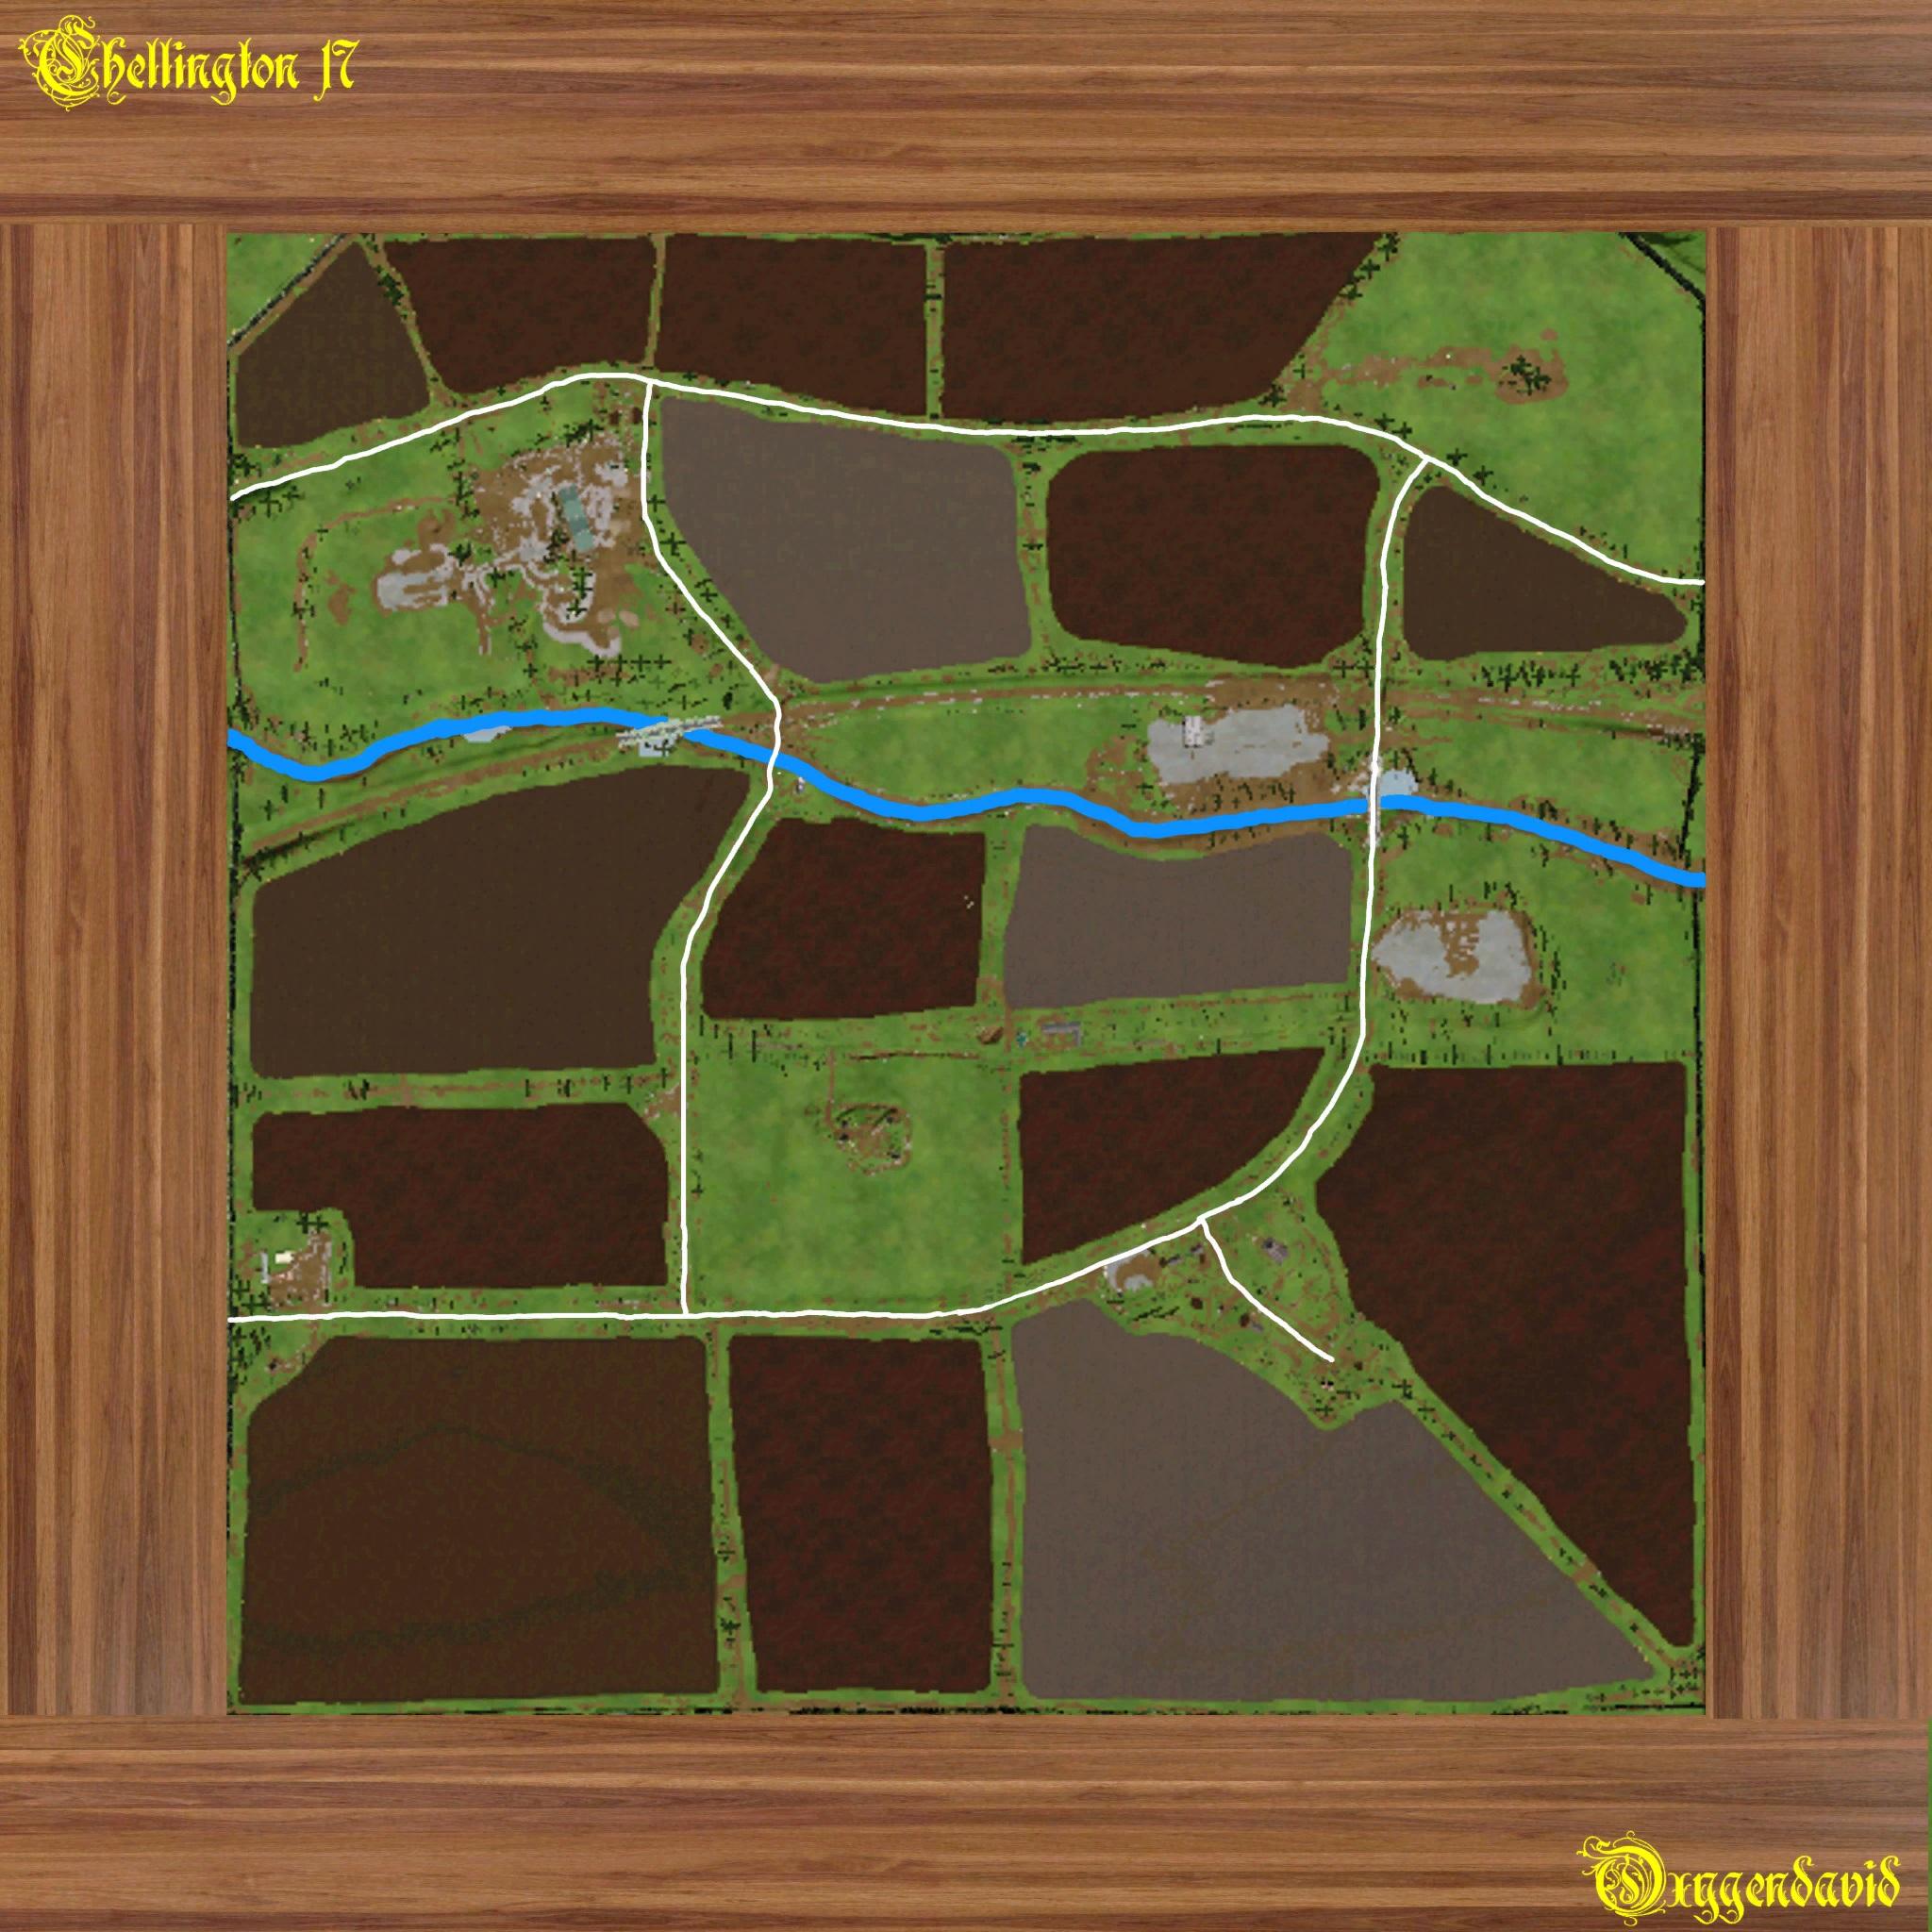 farming simulator 17 biggest map